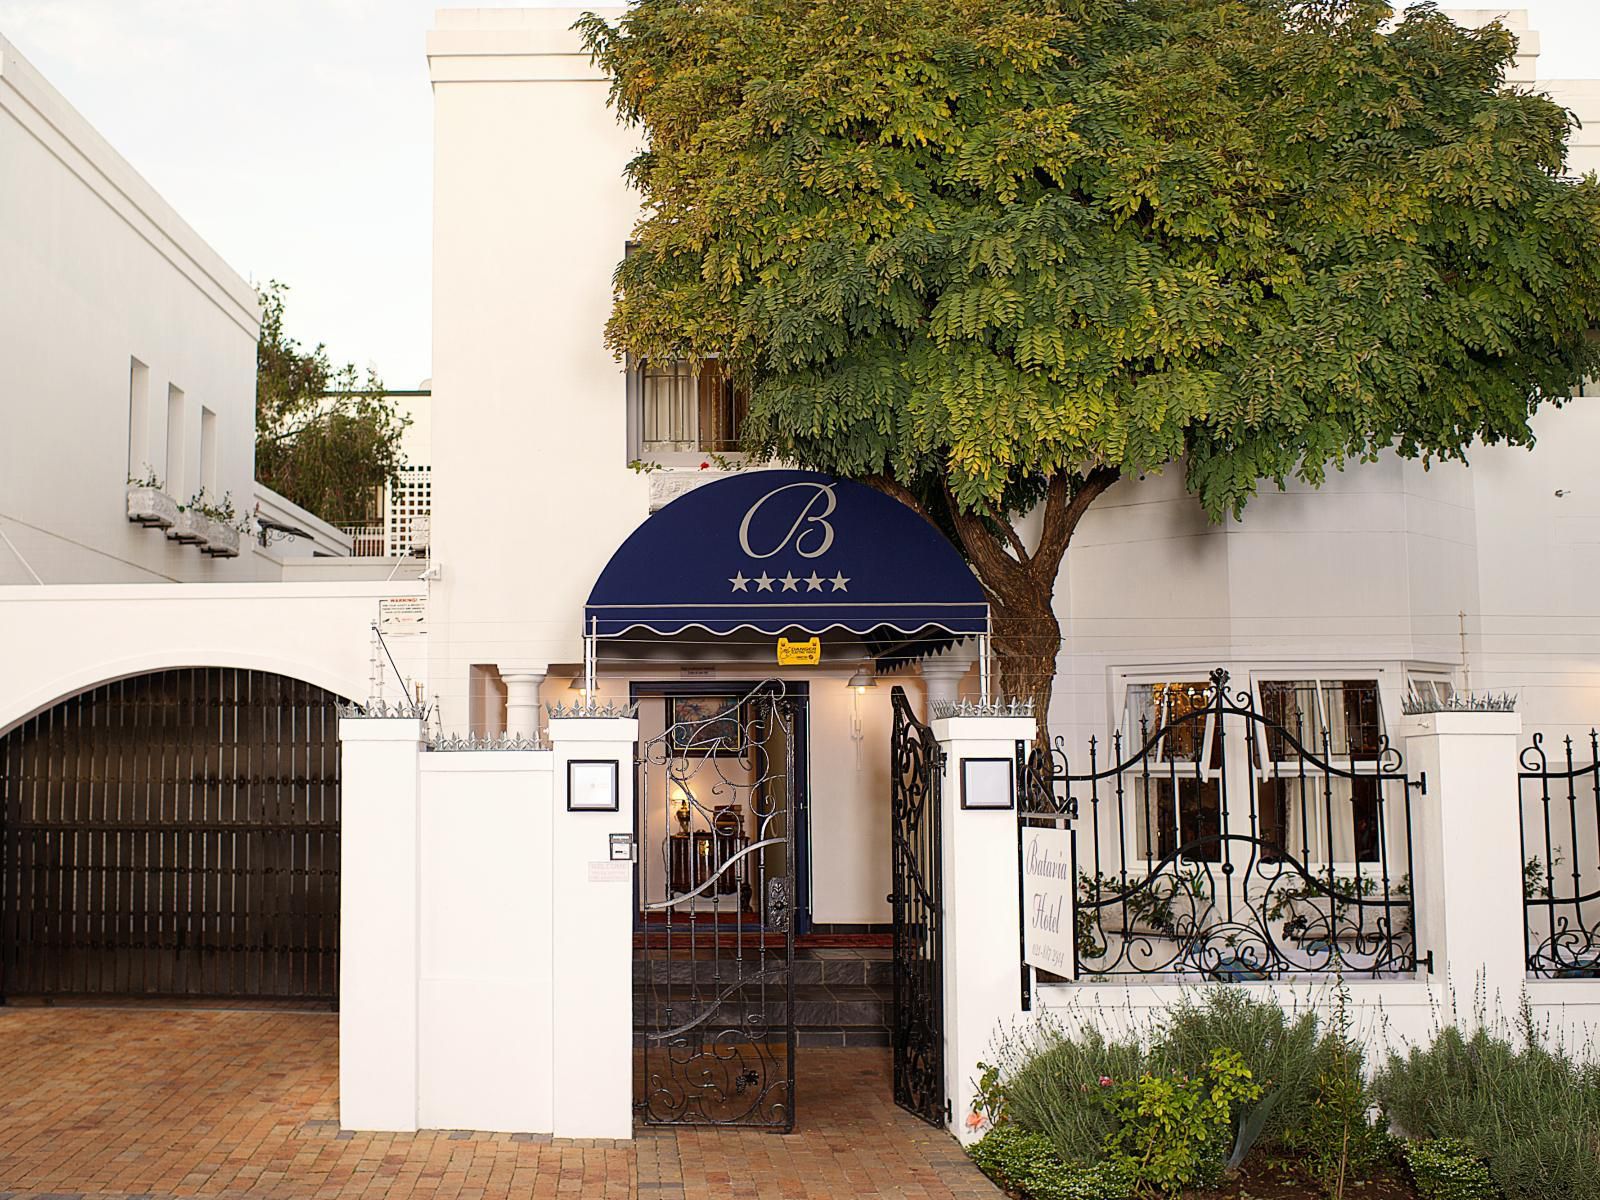 Batavia Boutique Hotel Krigeville Stellenbosch Western Cape South Africa House, Building, Architecture, Bar